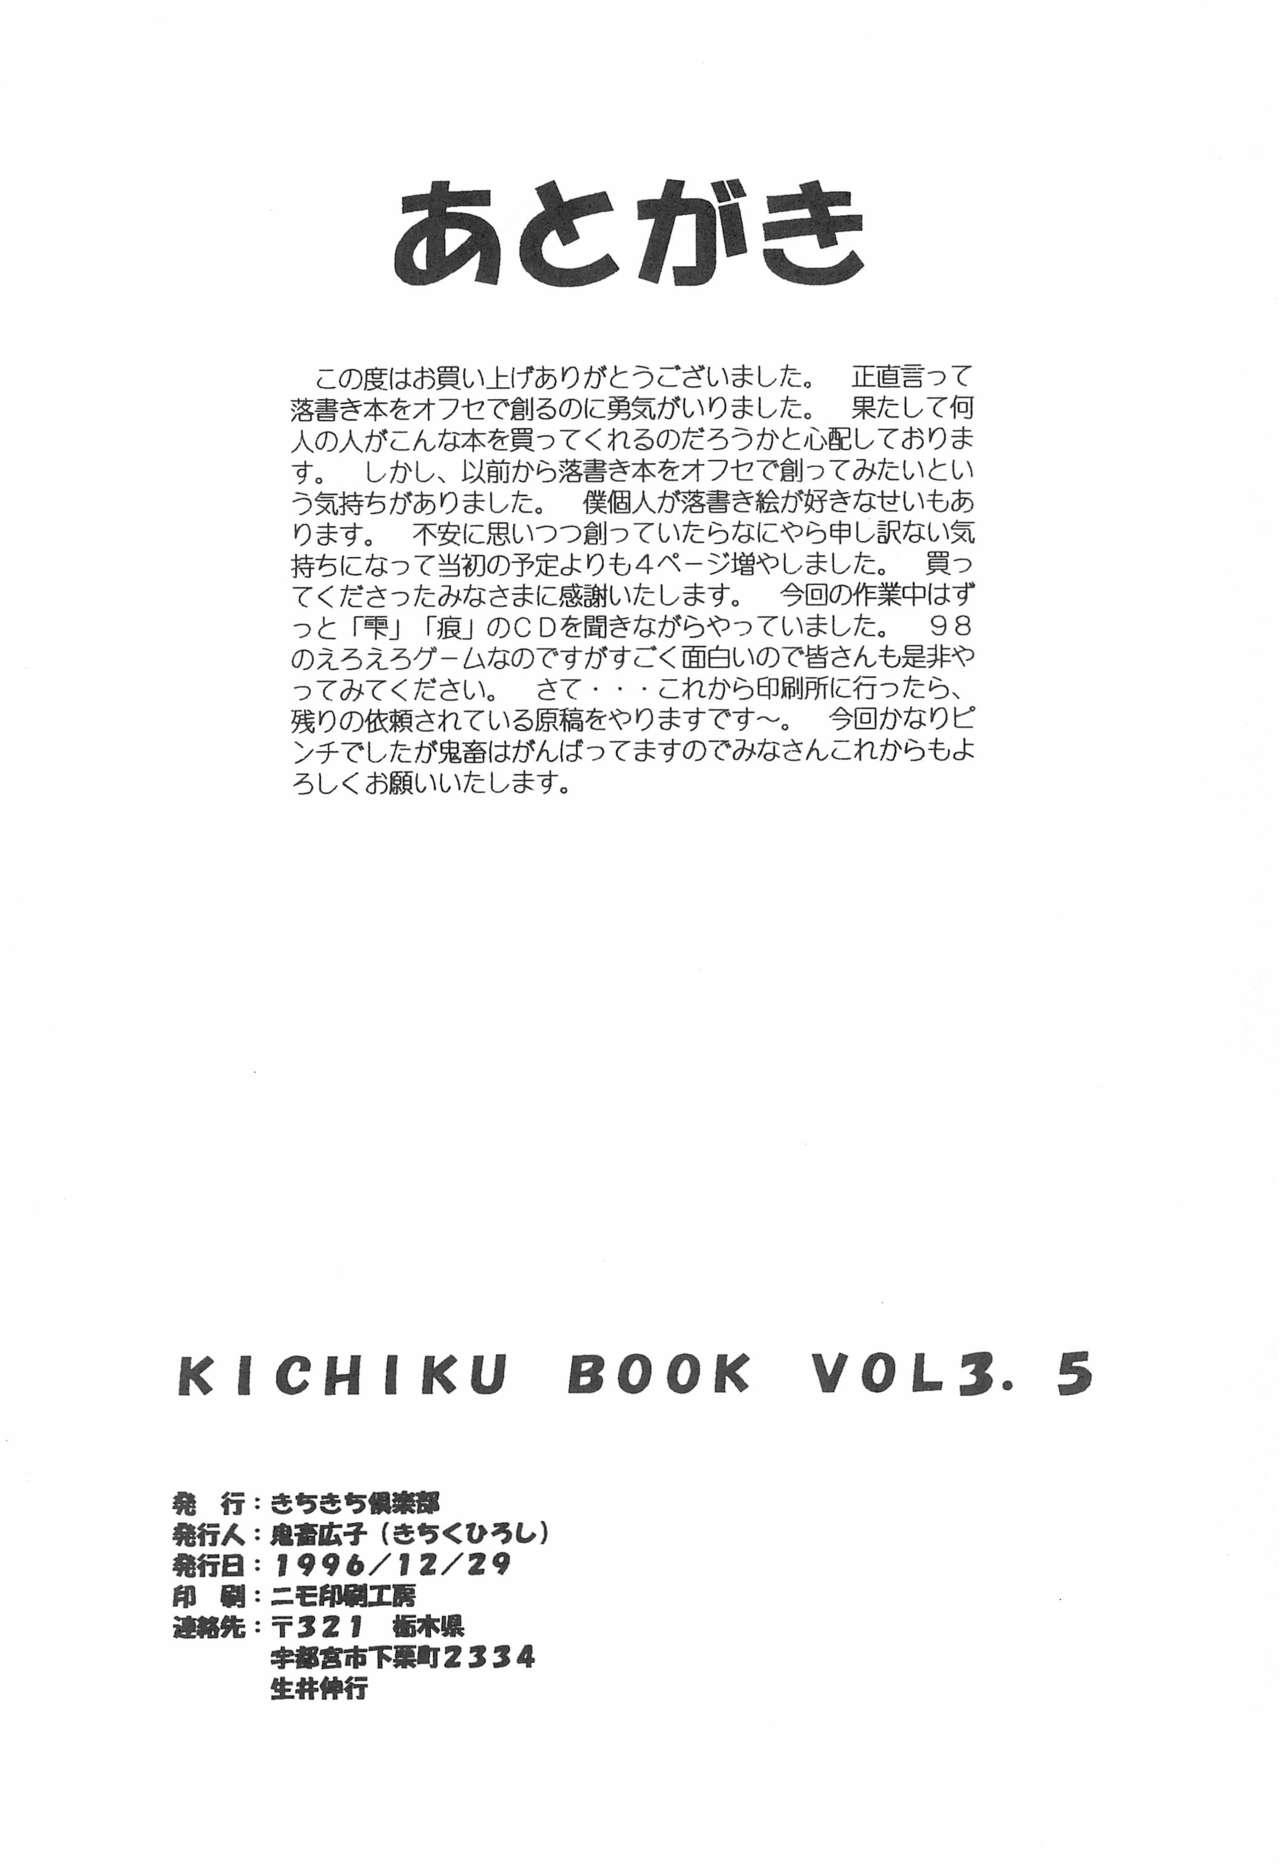 KICHIKUBOOK VOL3.5 25